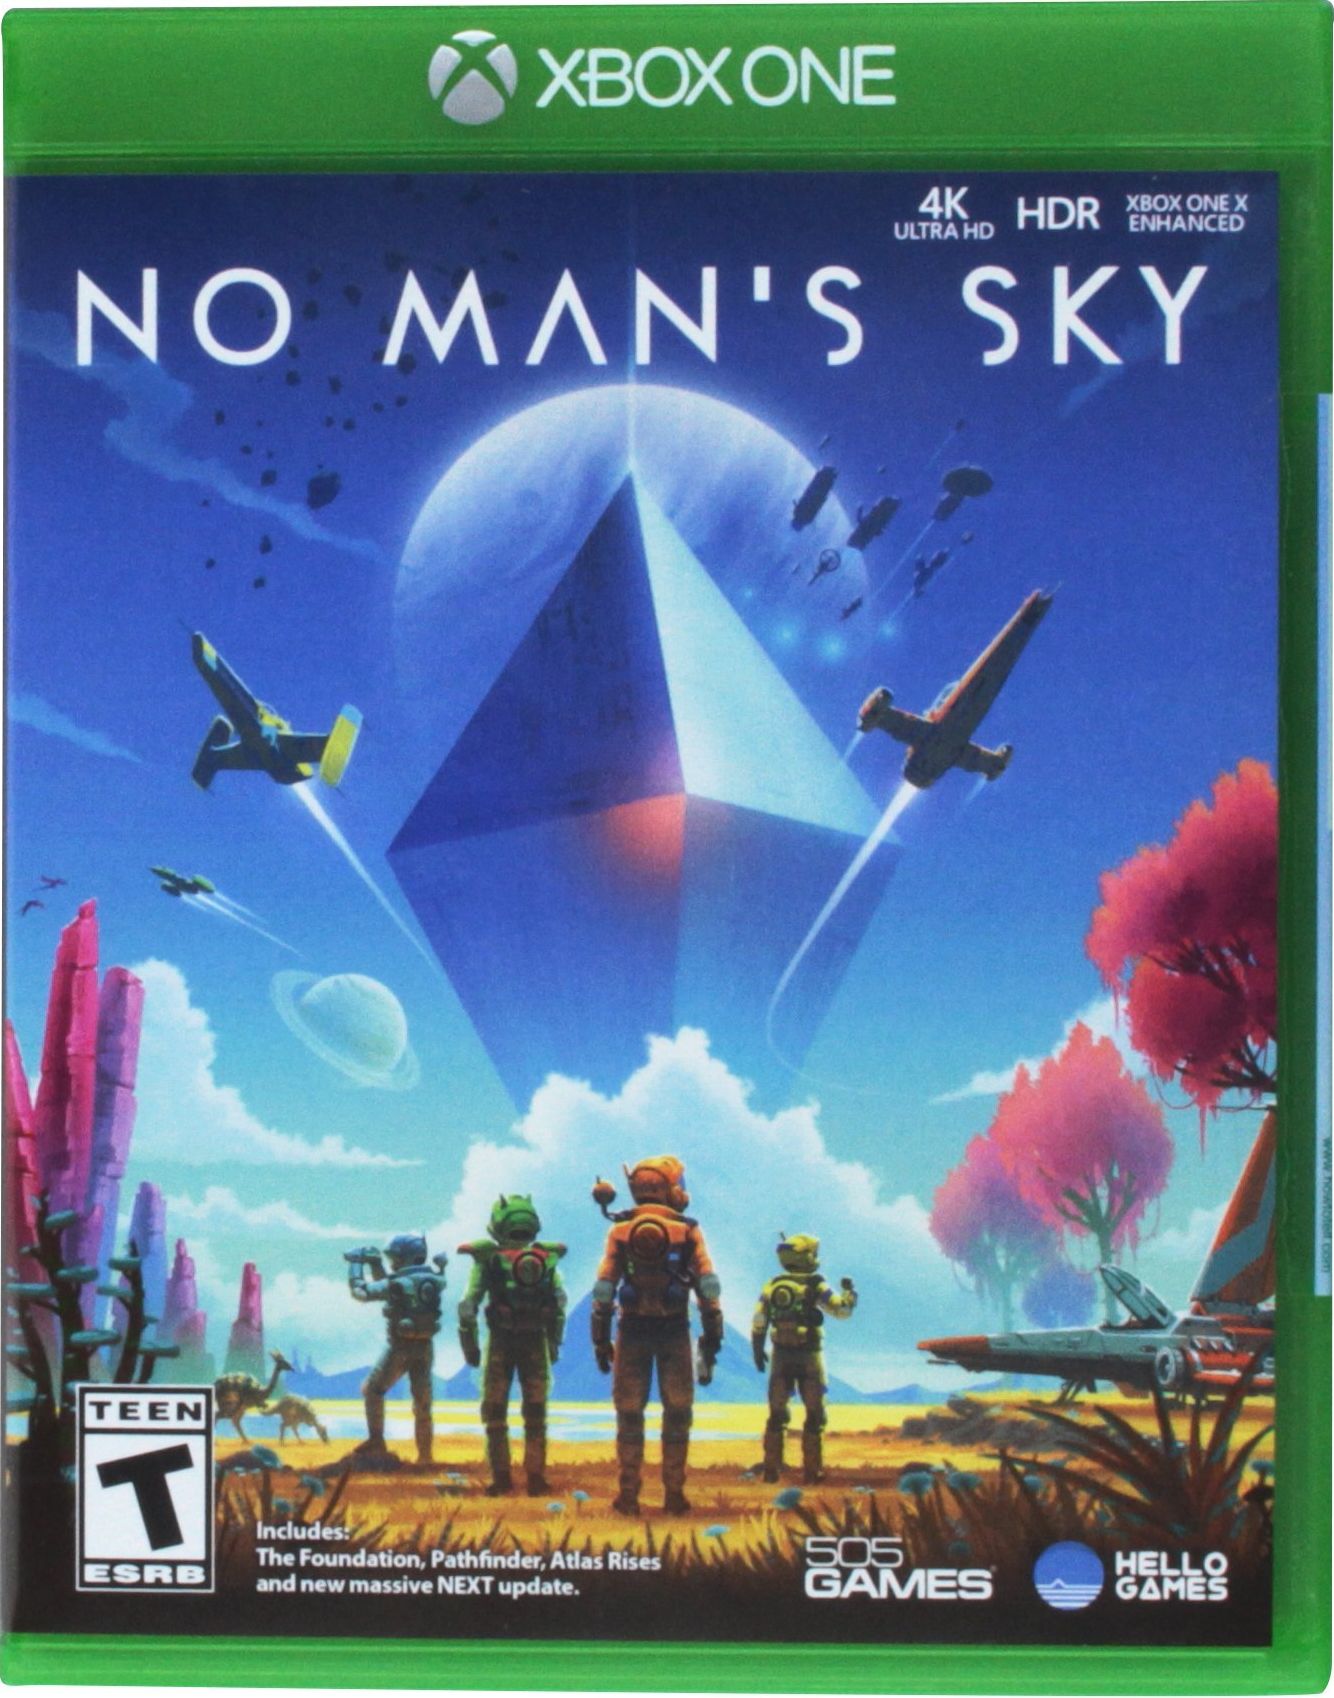 No man's sky release date